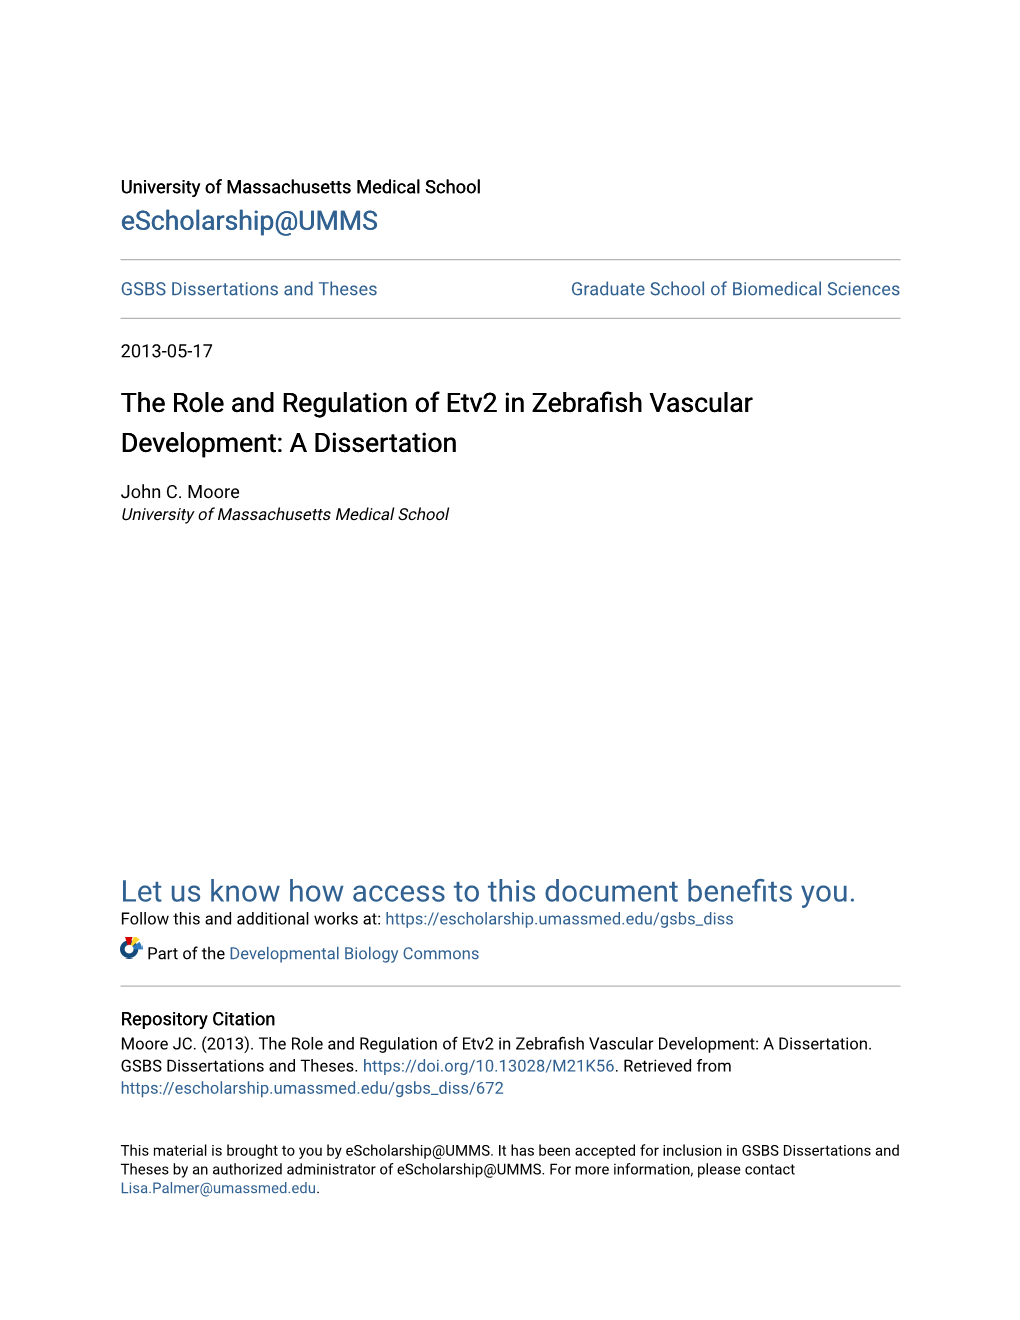 The Role and Regulation of Etv2 in Zebrafish Vascular Development: a Dissertation